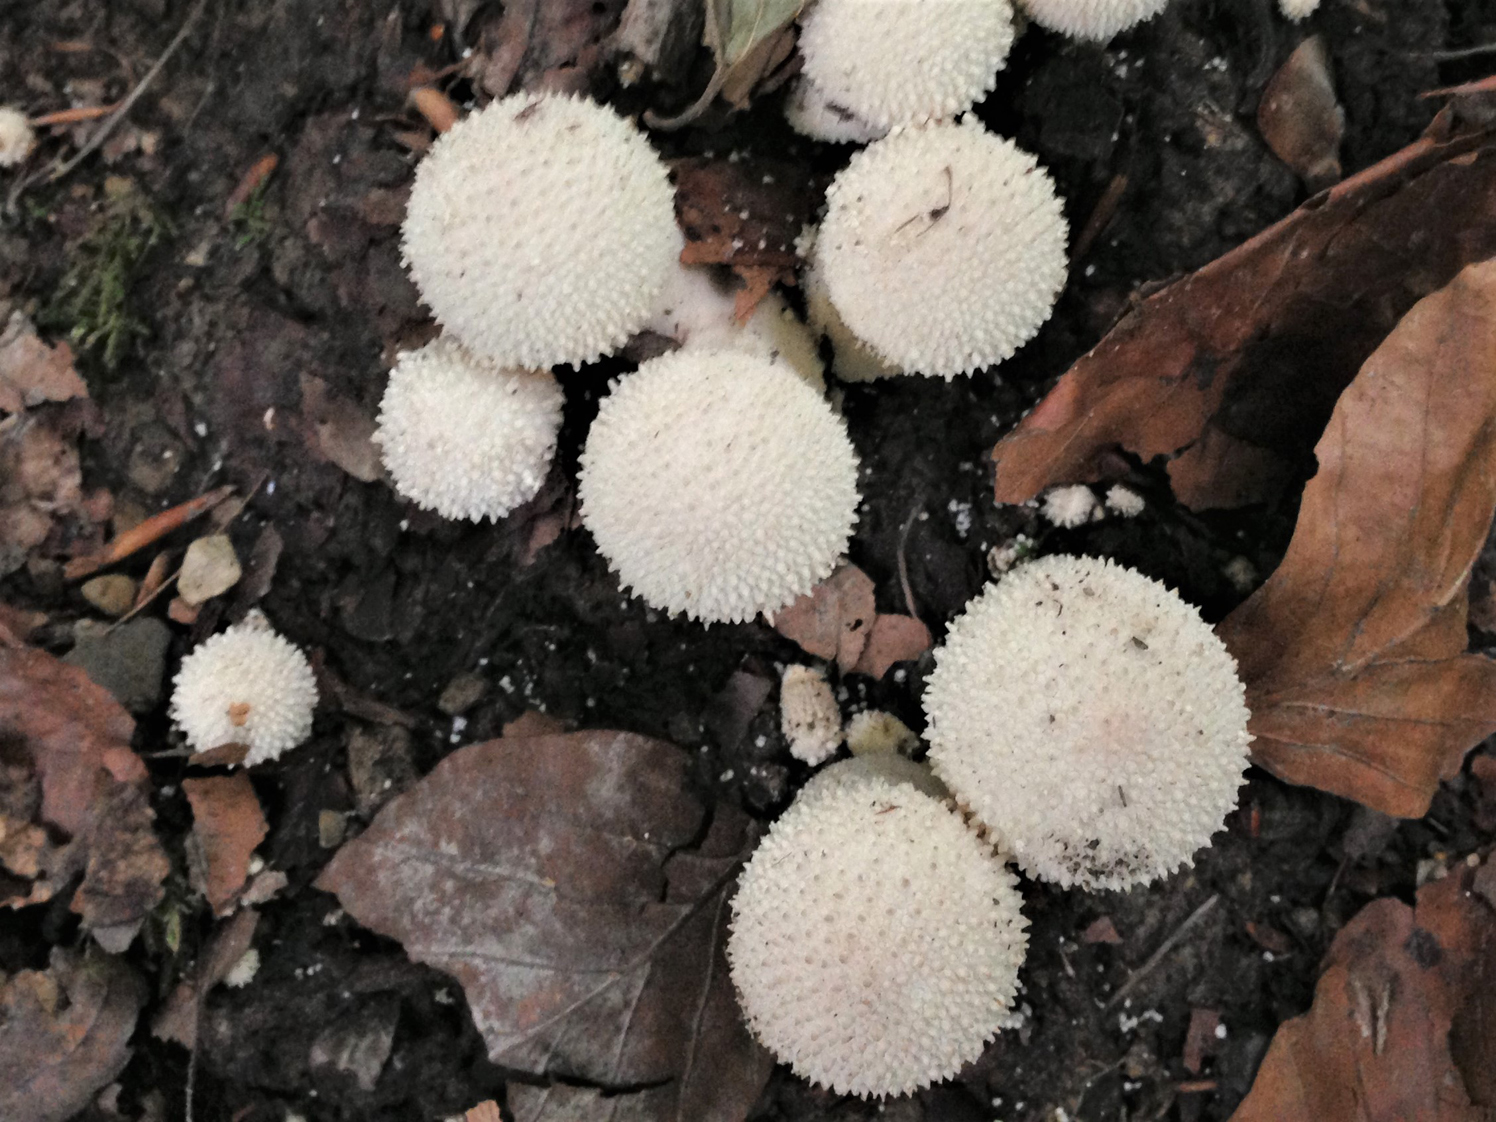 Lycoperdon perlatum, Common Puffball, identification